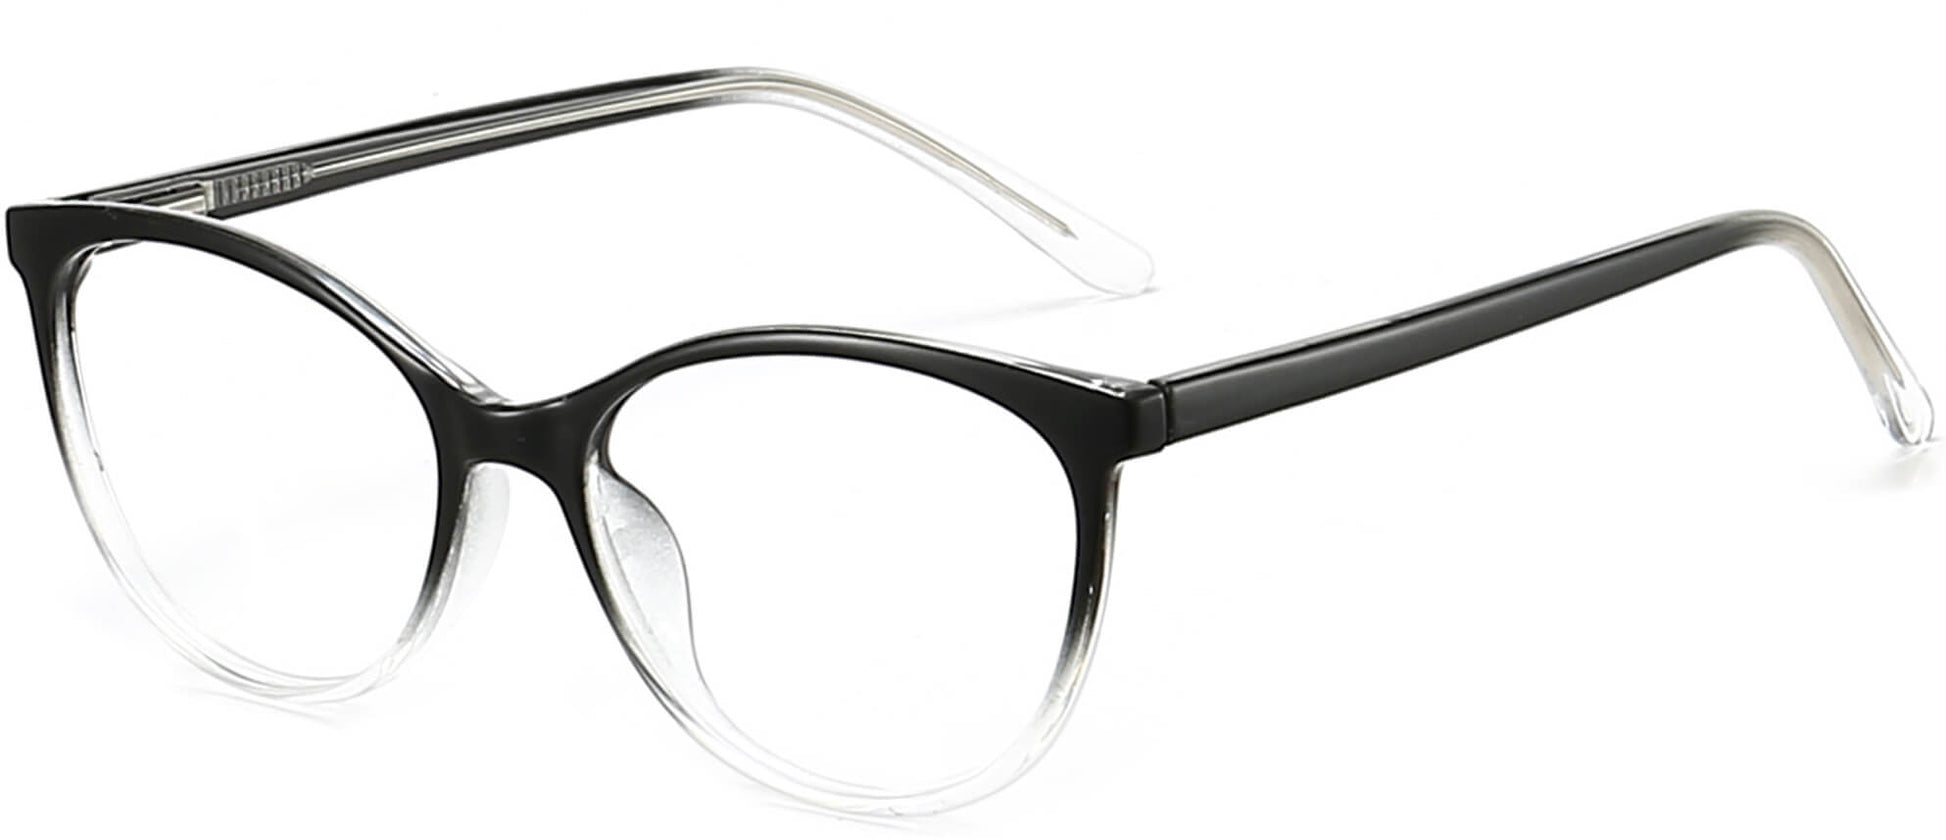 Transmit Cateye Black Eyeglasses from ANRRI, angle view